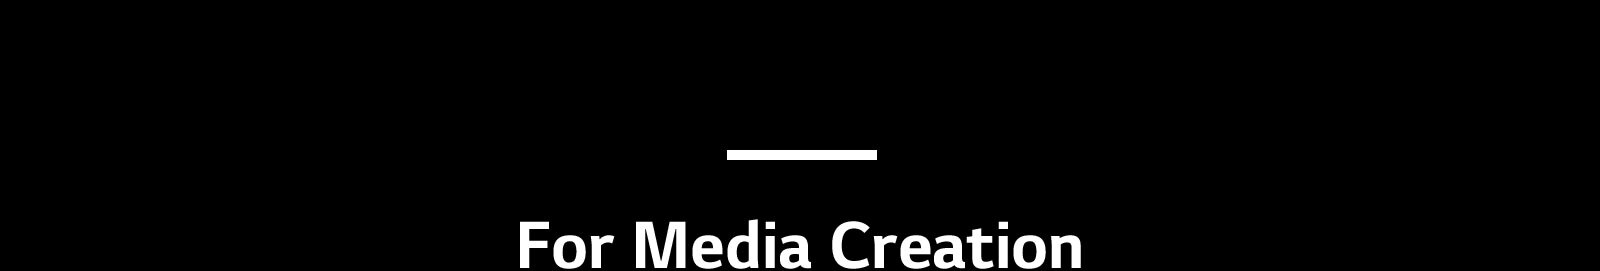 For Media Creation